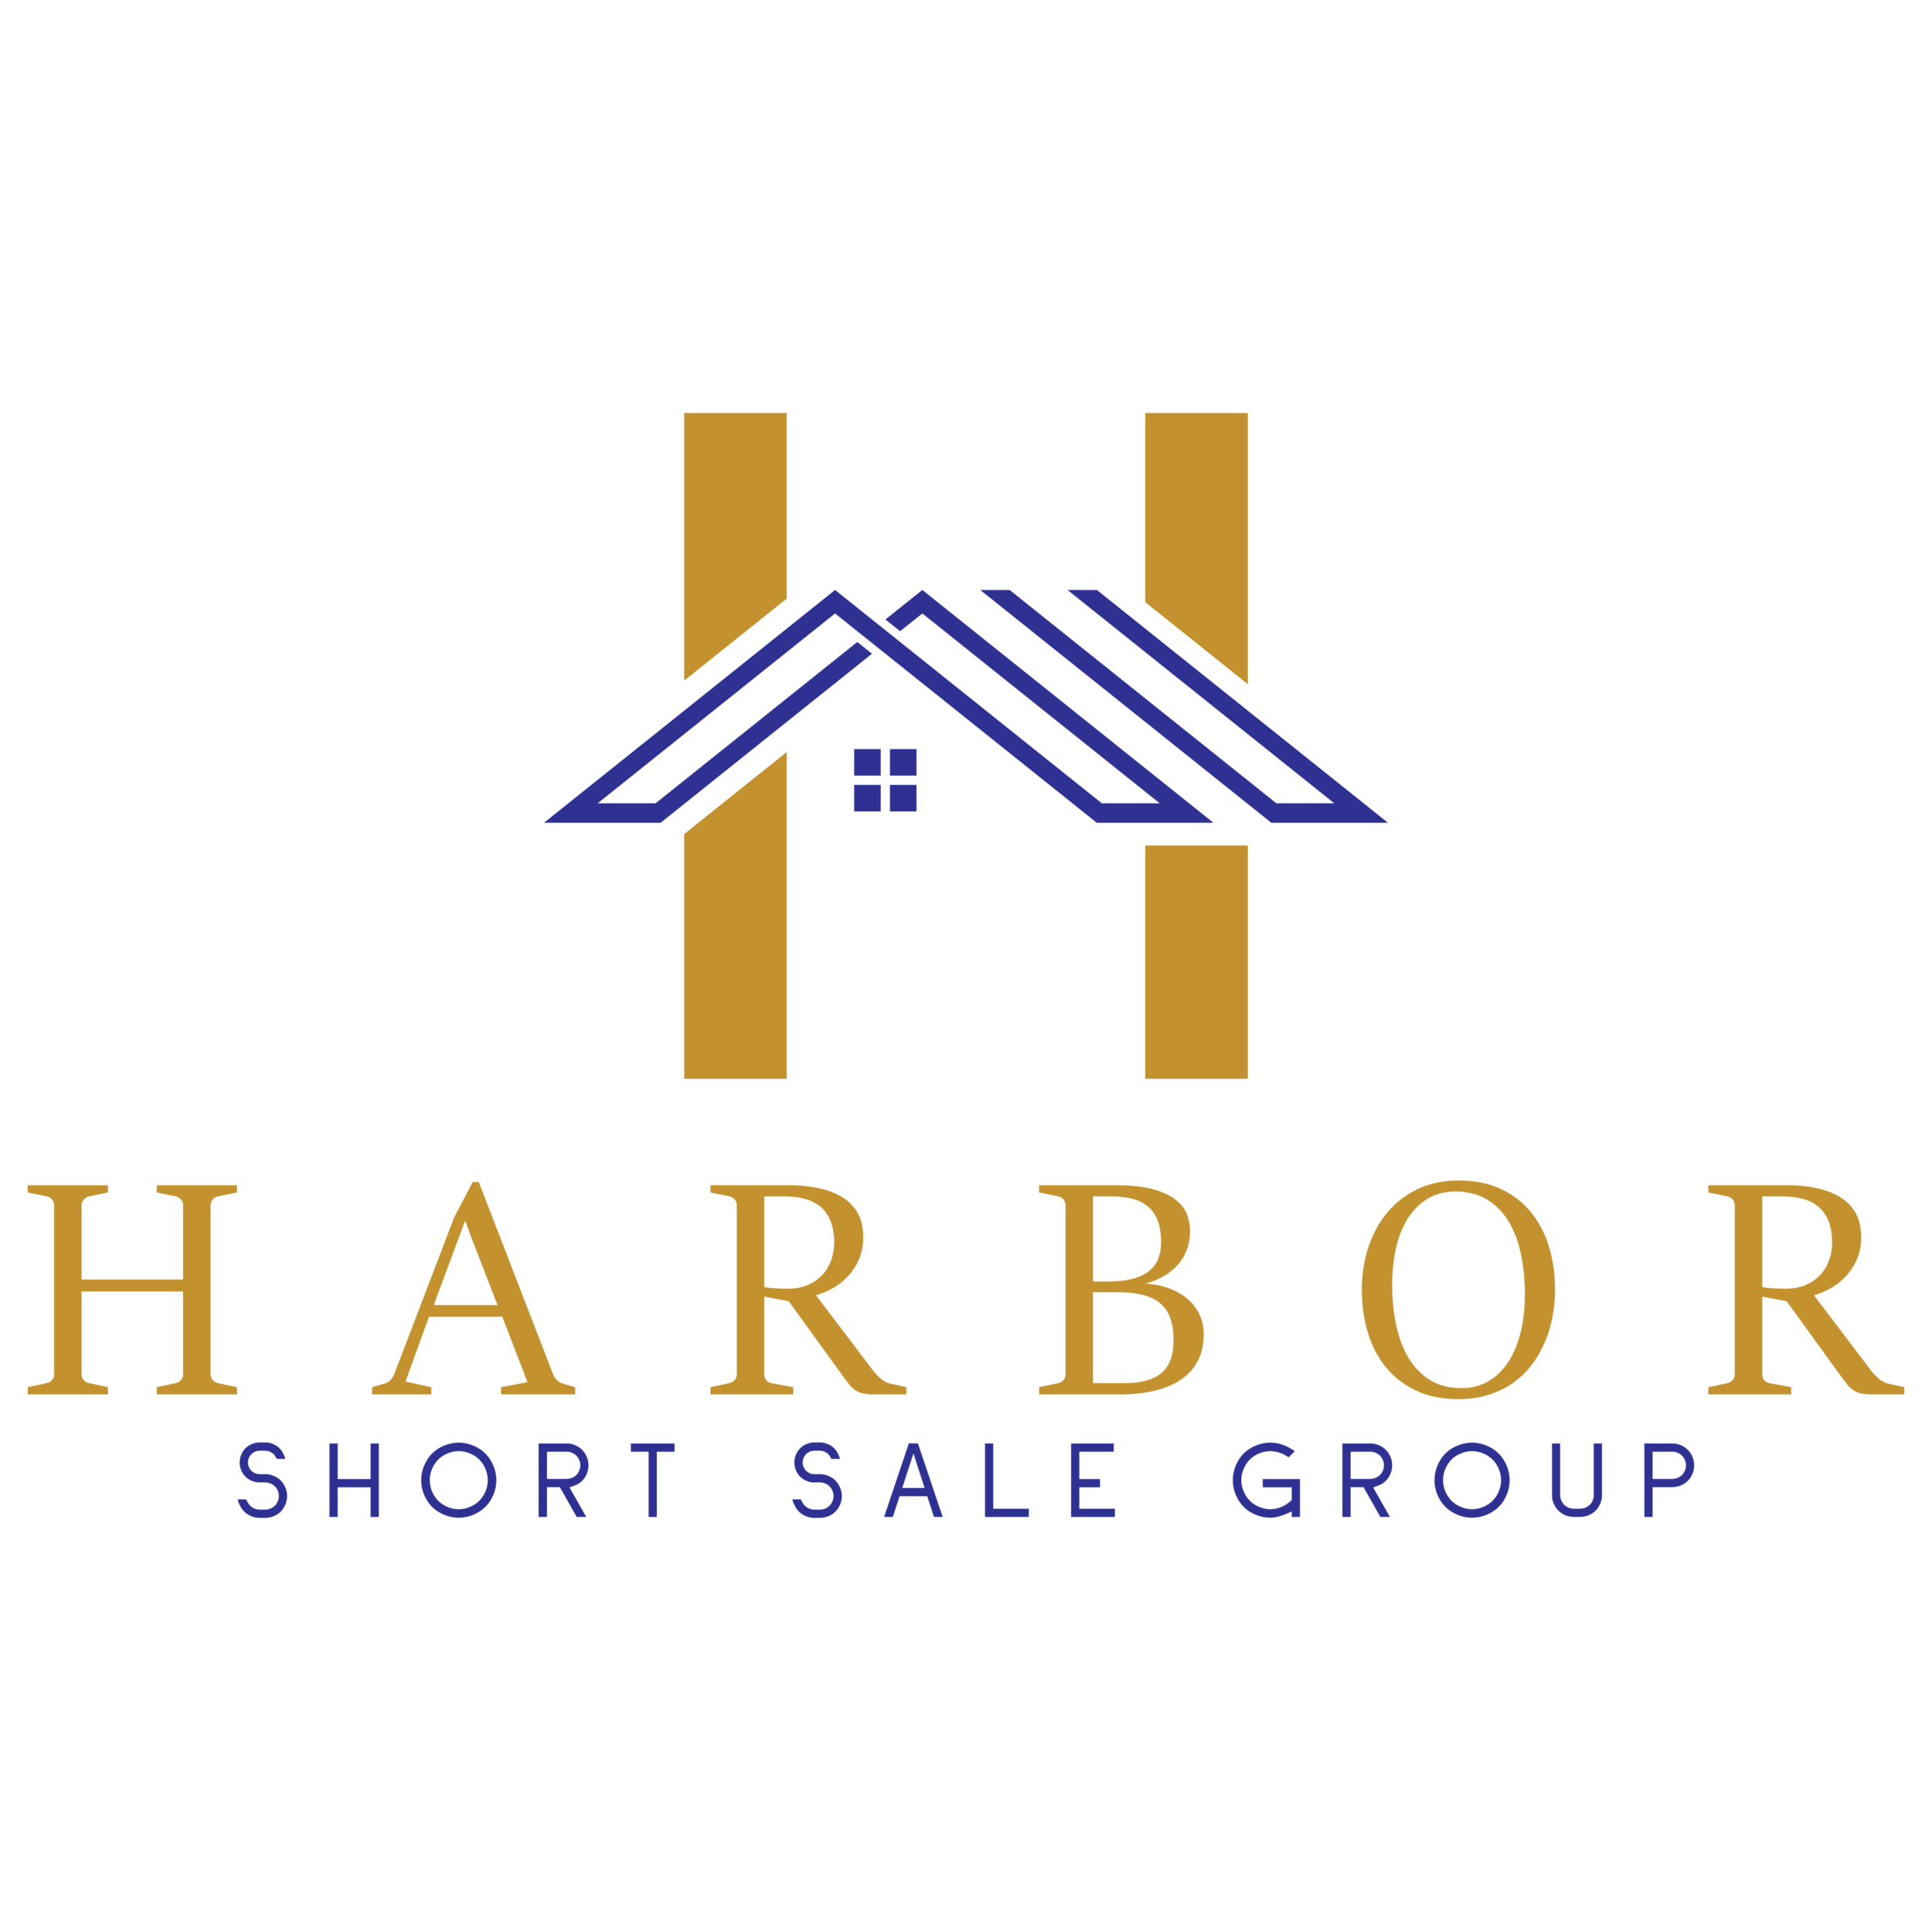 HARBOR SHORT SALE GROUP